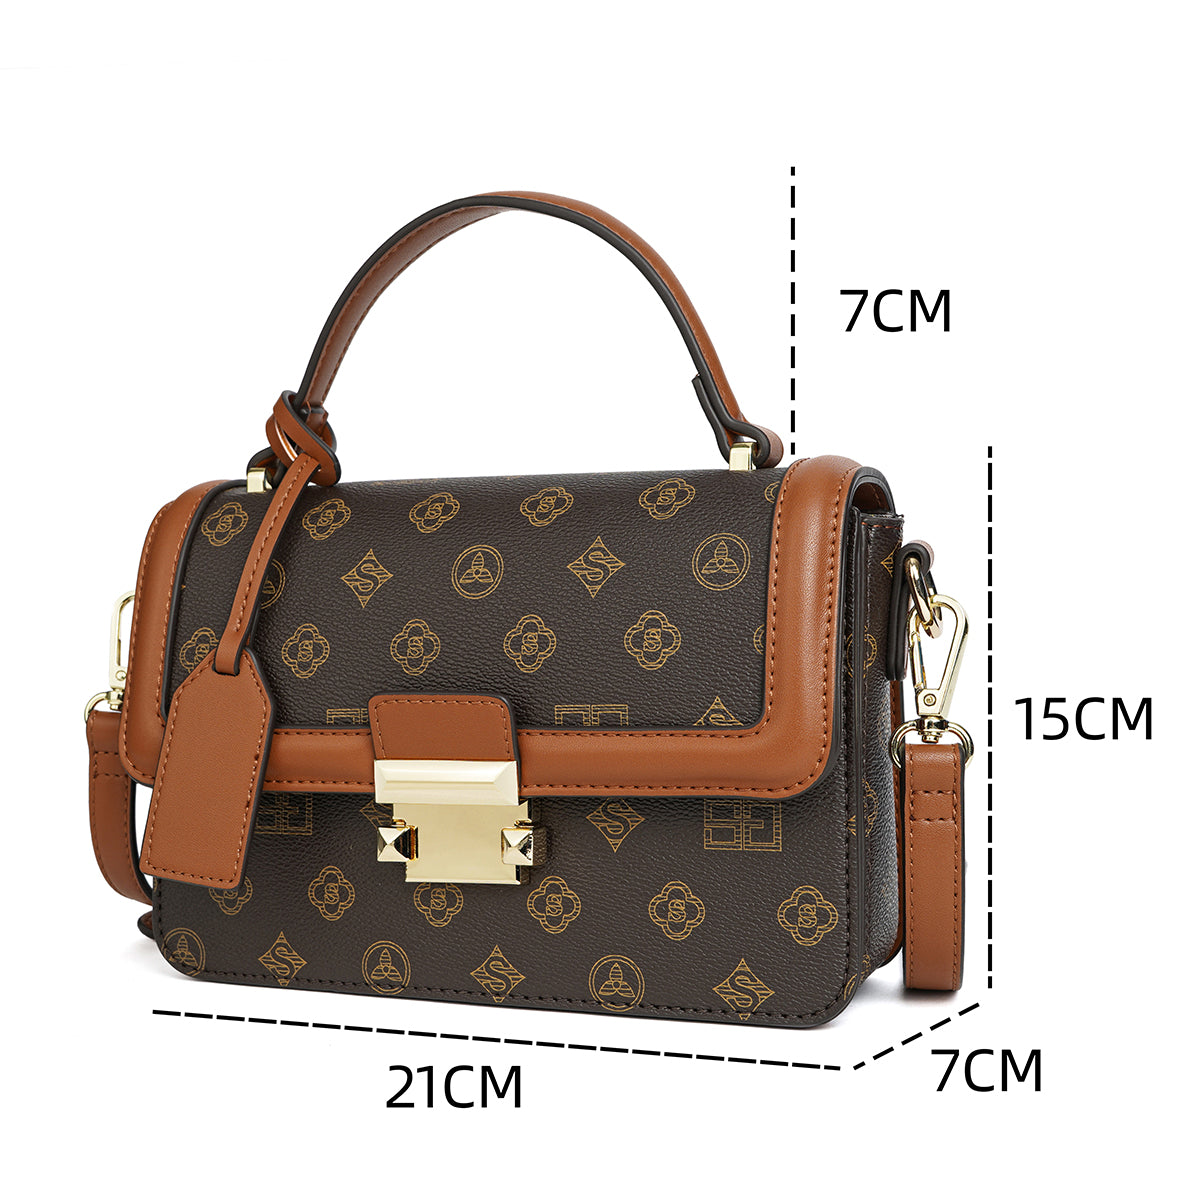 Practical and elegant bag, 21 cm wide, in brown or tan color